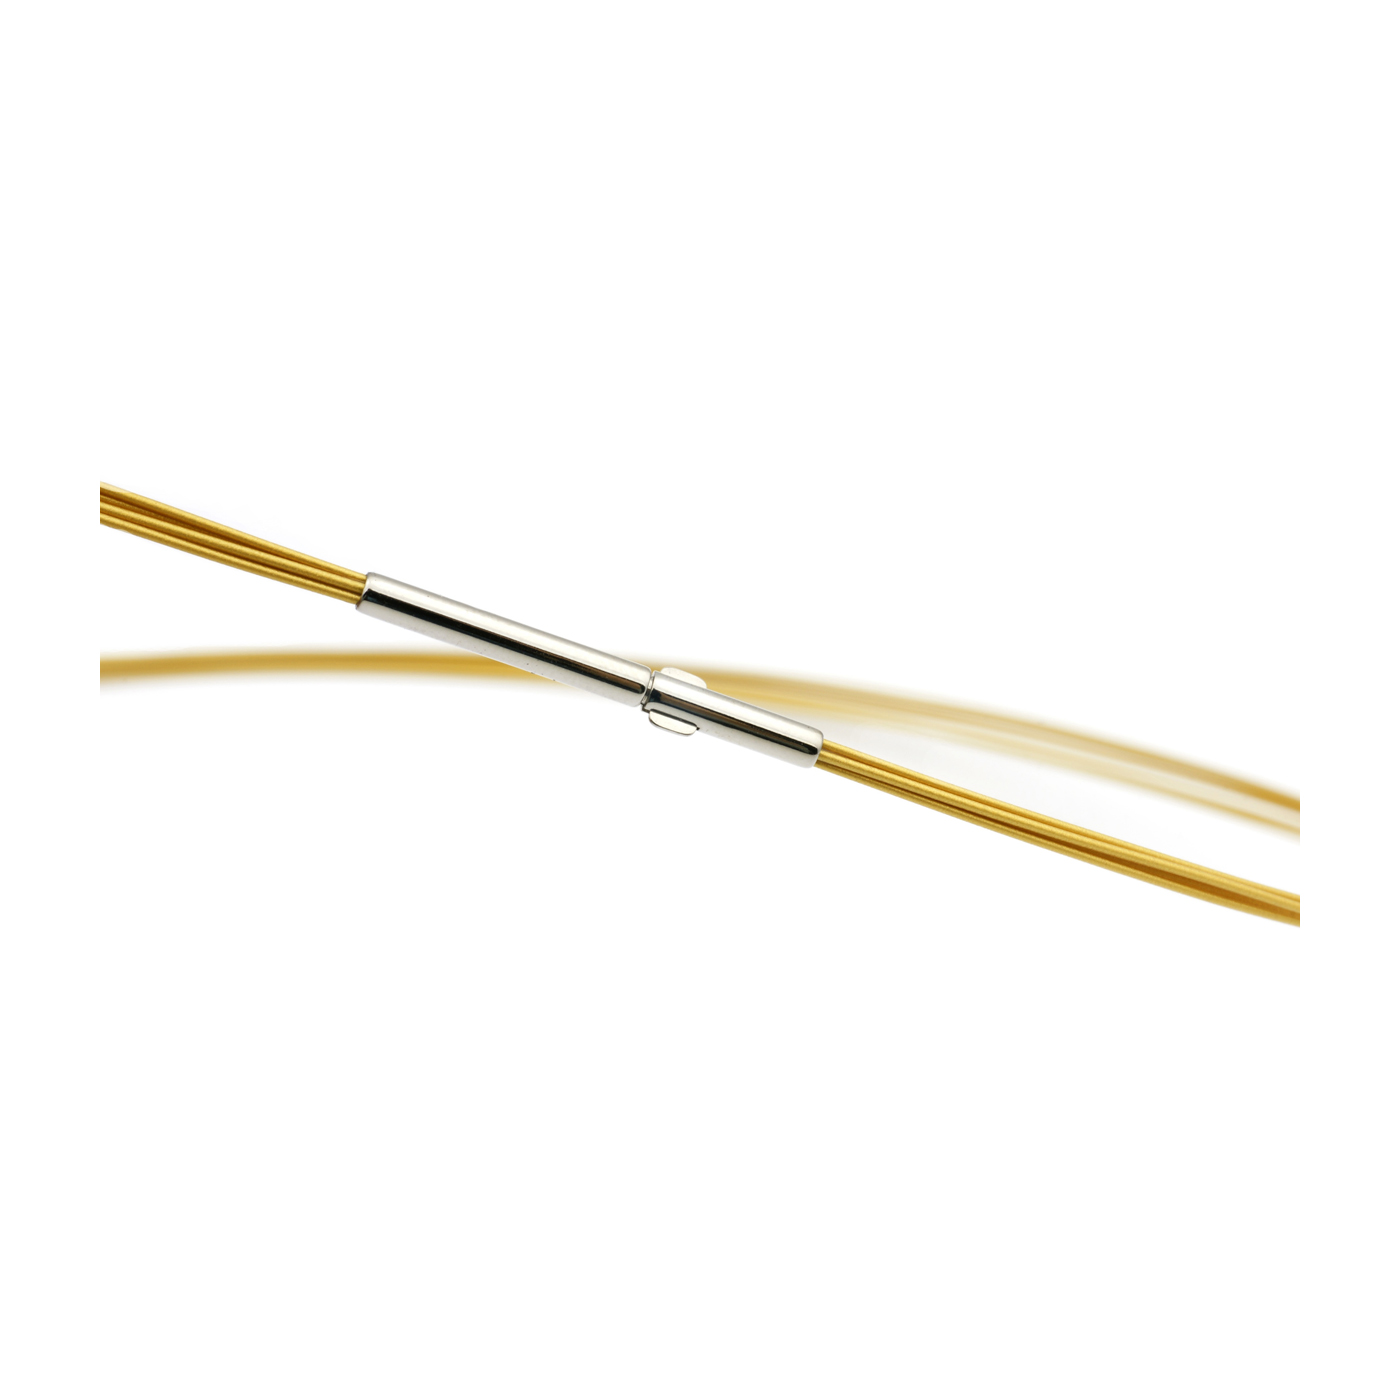 Seilcollier "Colour Cable", ES, gold metallic, 5-reihig,45cm - 1 Stück